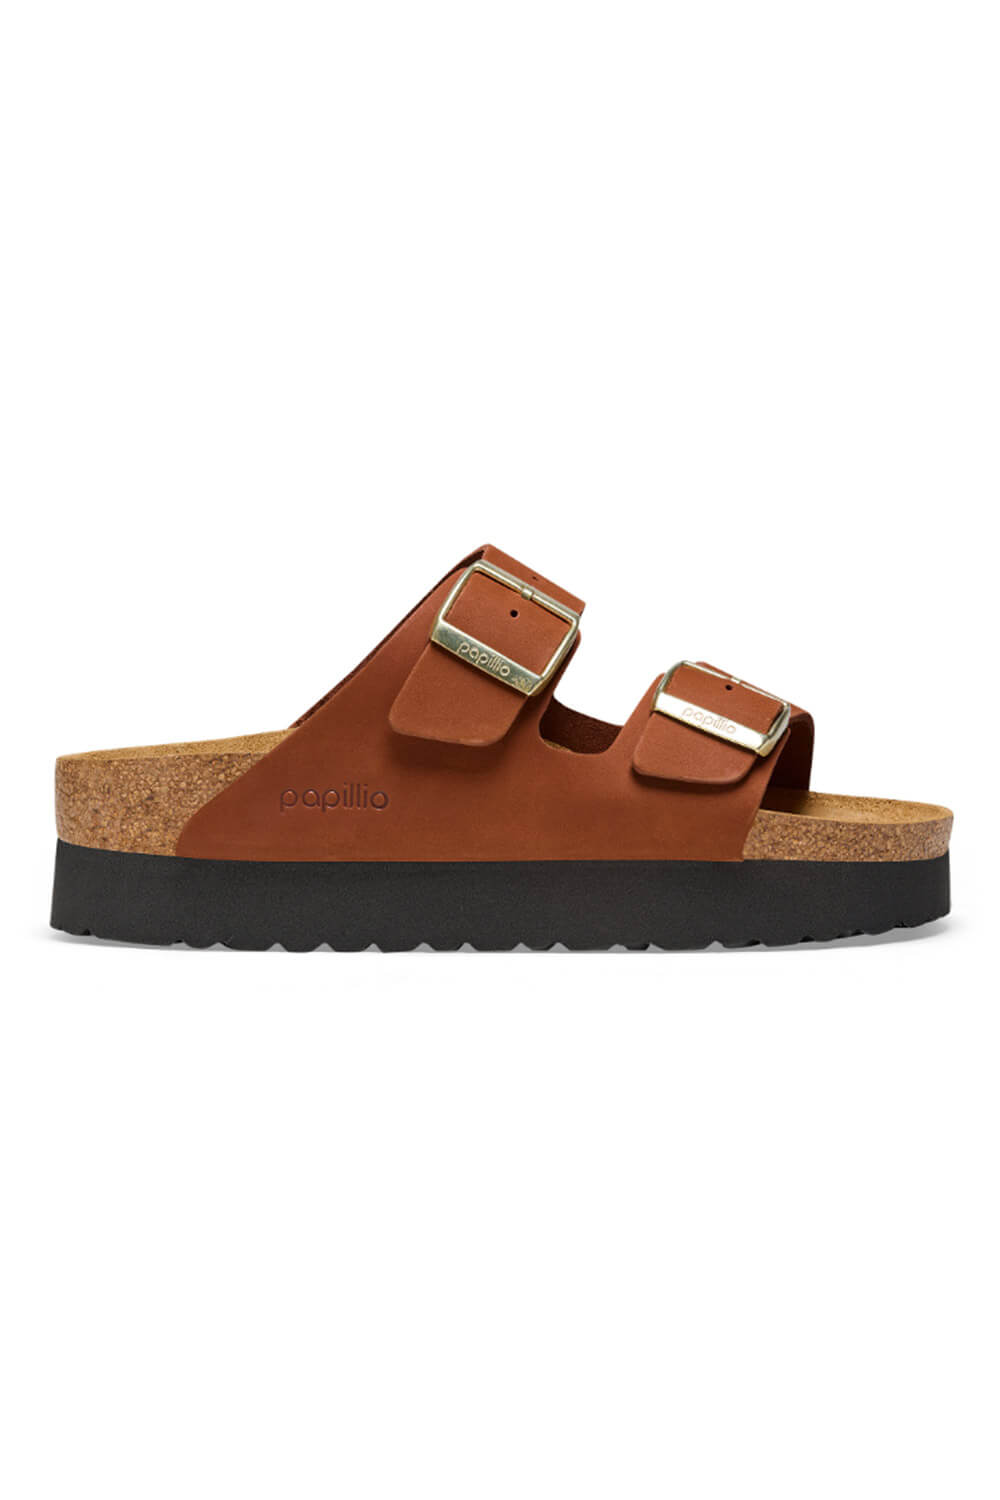 Papillo by Birkenstock Arizona Platform Nubuck Leather Sandals for Wom ...